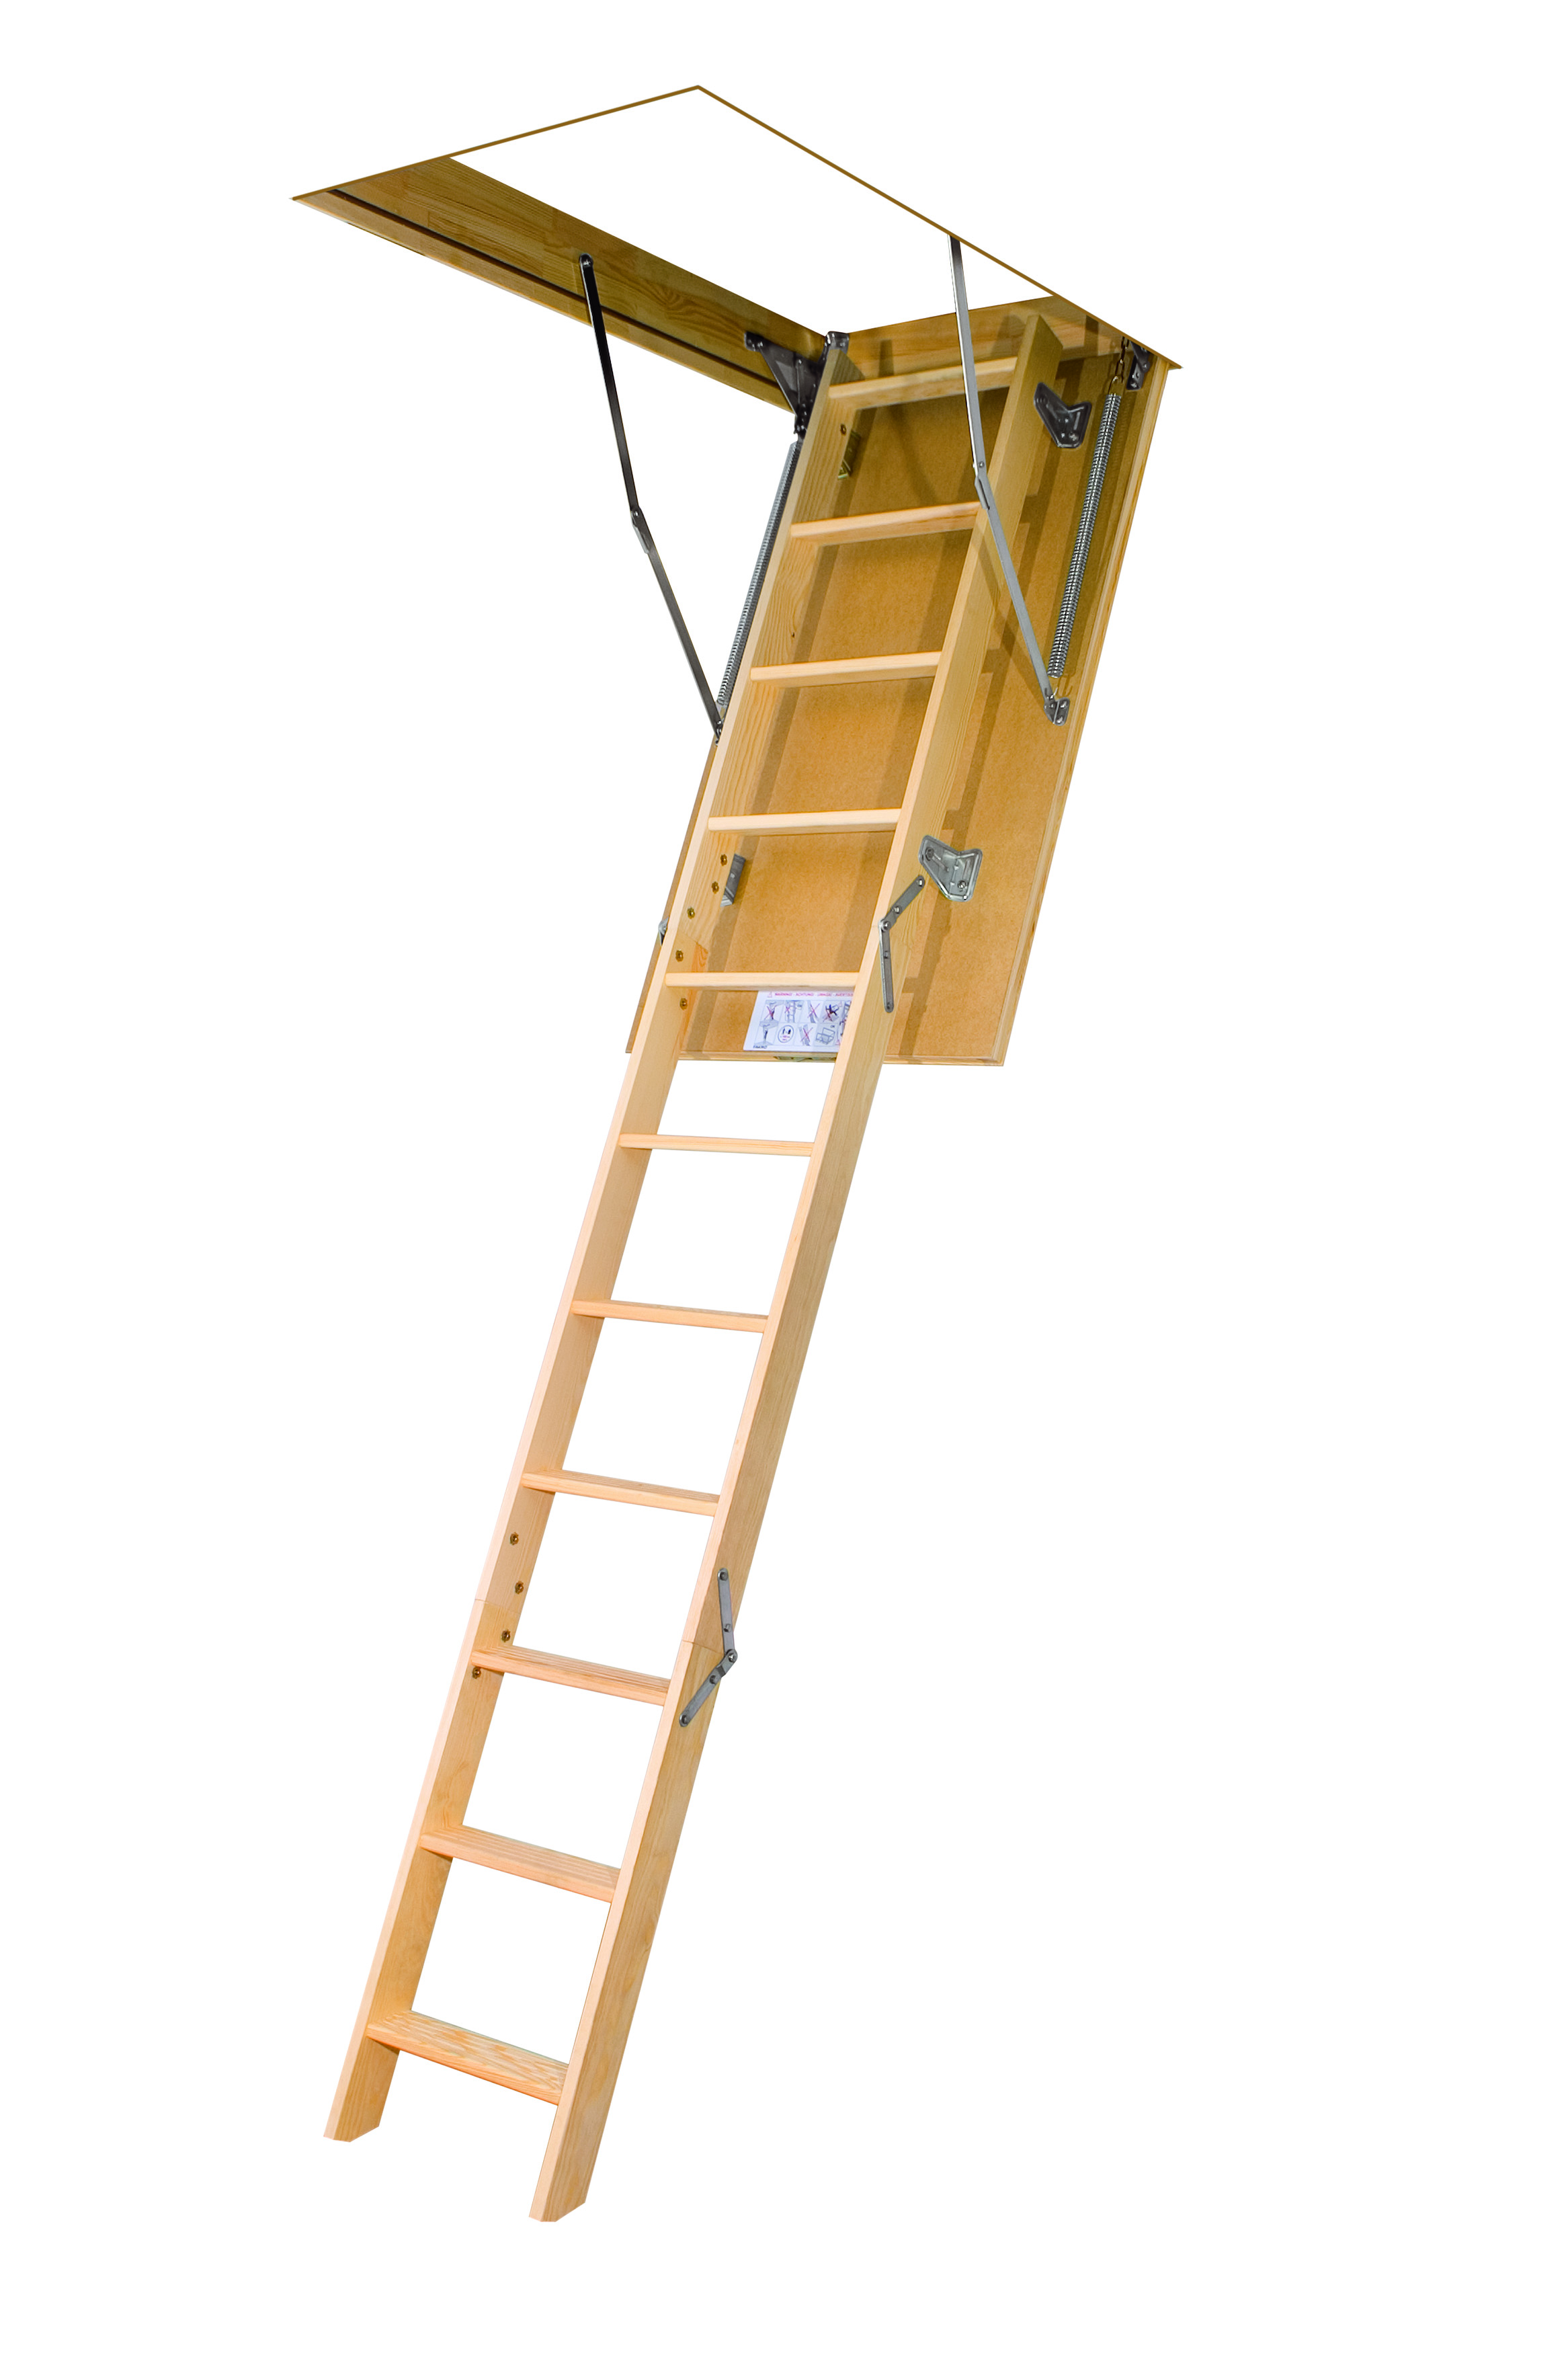 Fakro LWS 60х120х280 см деревянная чердачная лестница (Факро), Лестница чердачная LWS 60х120х280 Fakro